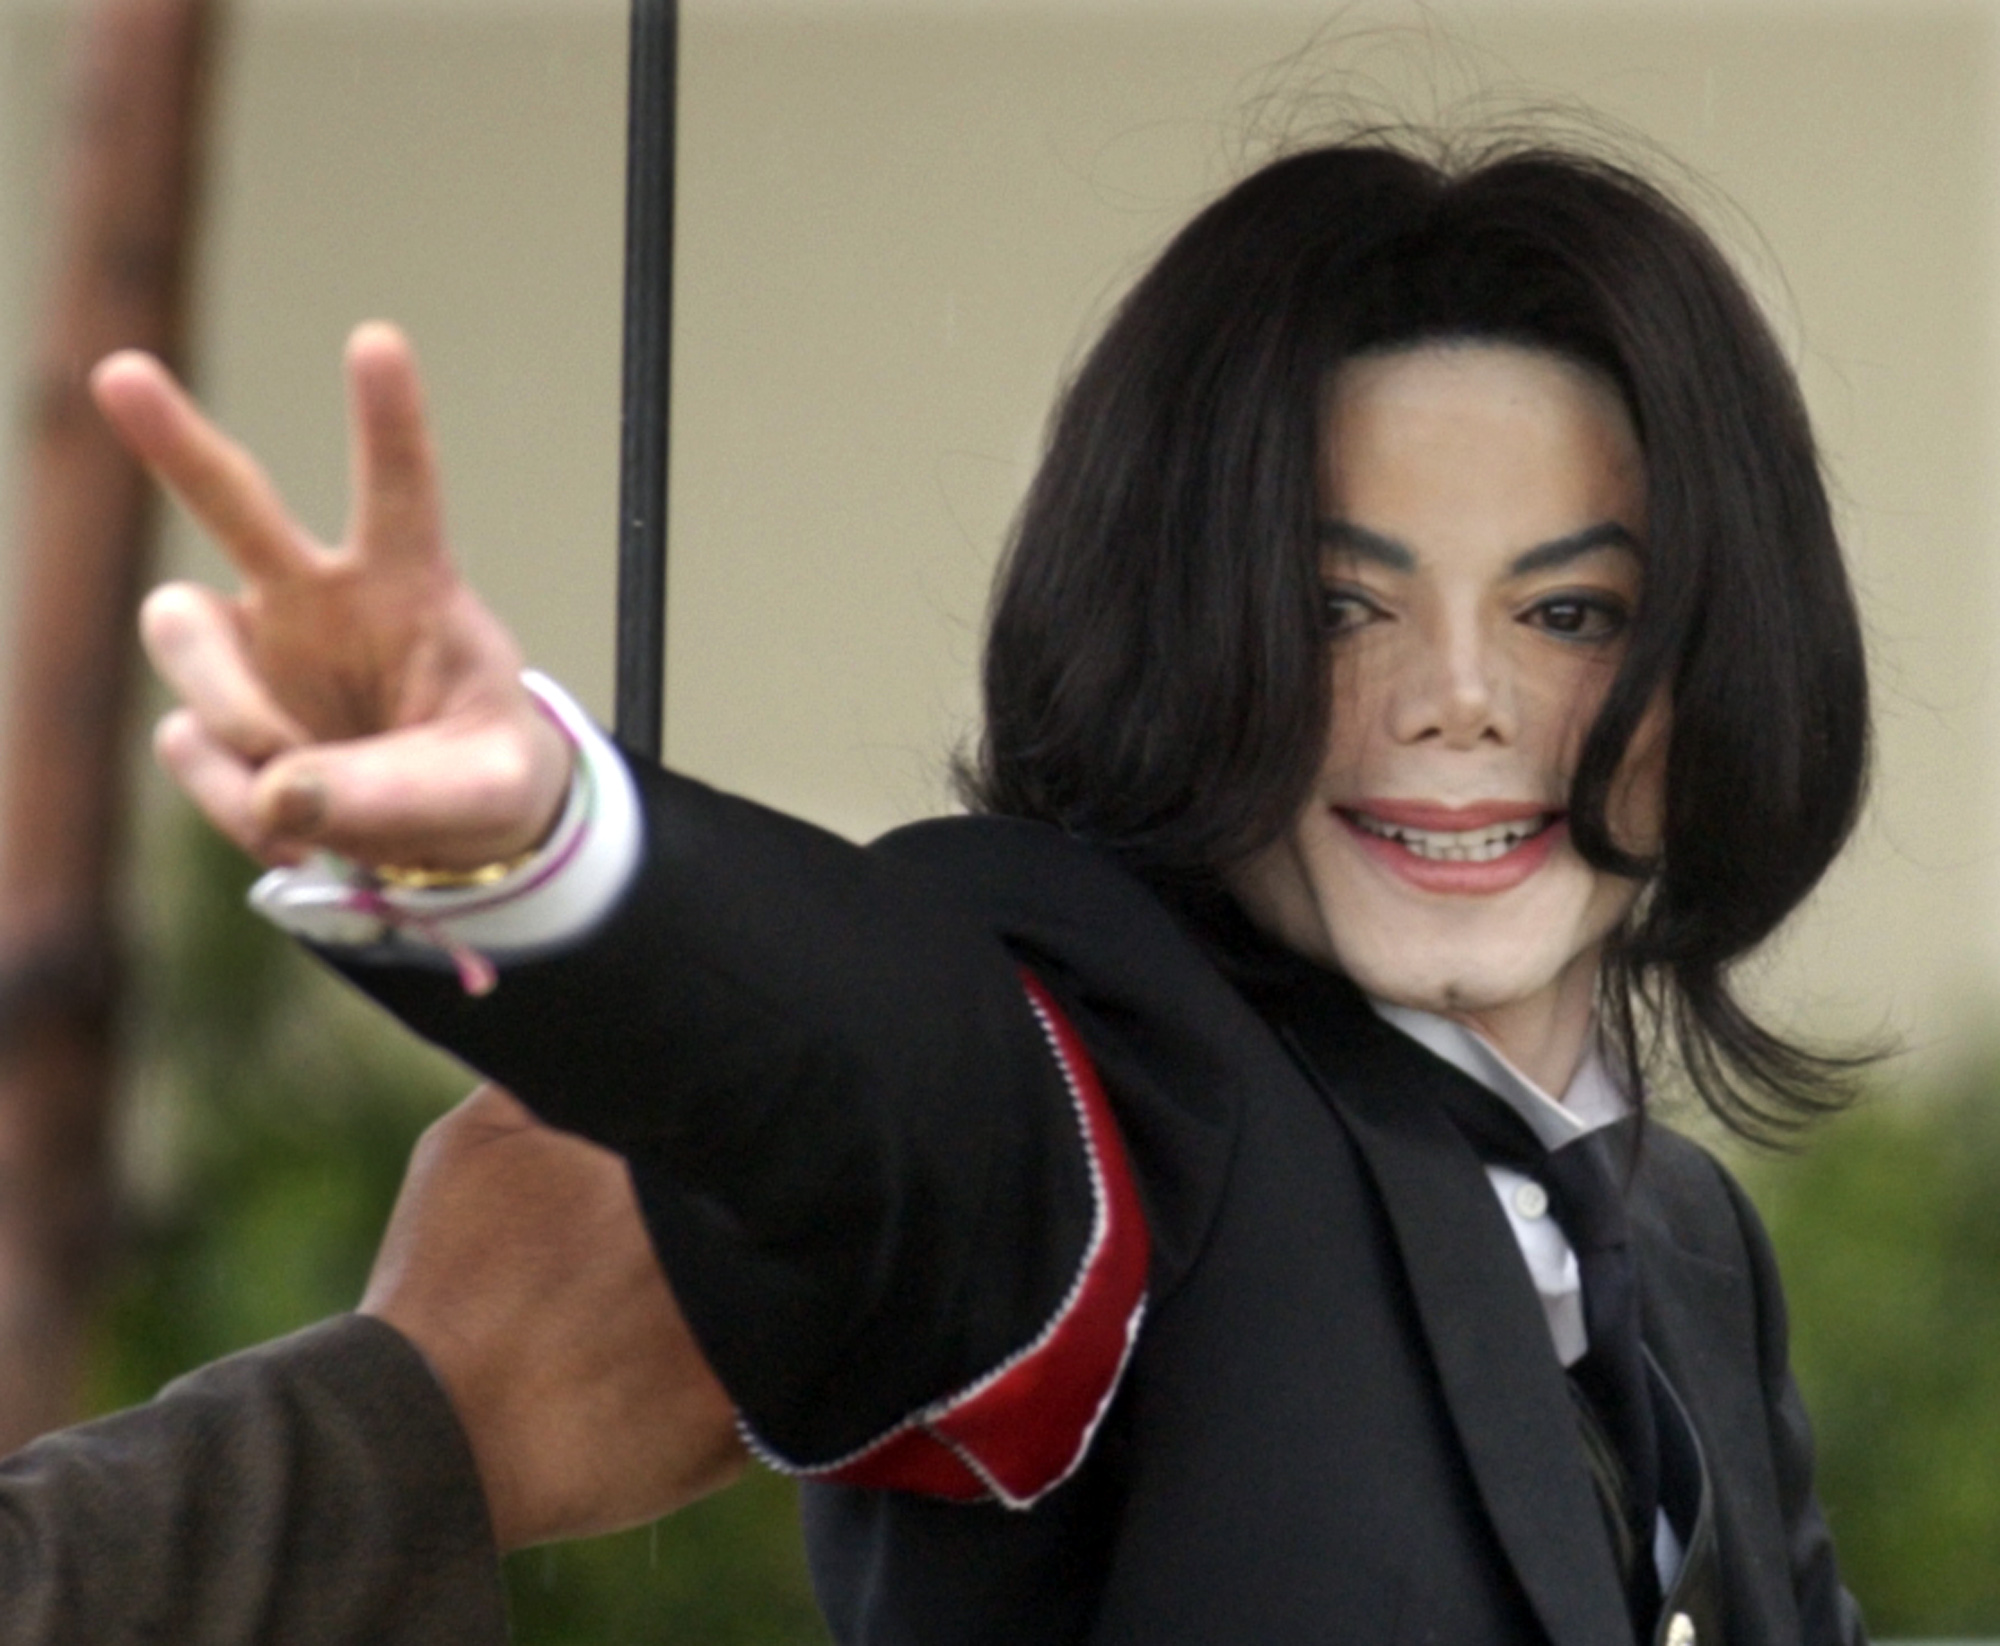 Michael Jackson, Död, Discovery Channel, Obduktion, Namninsamling, Protest